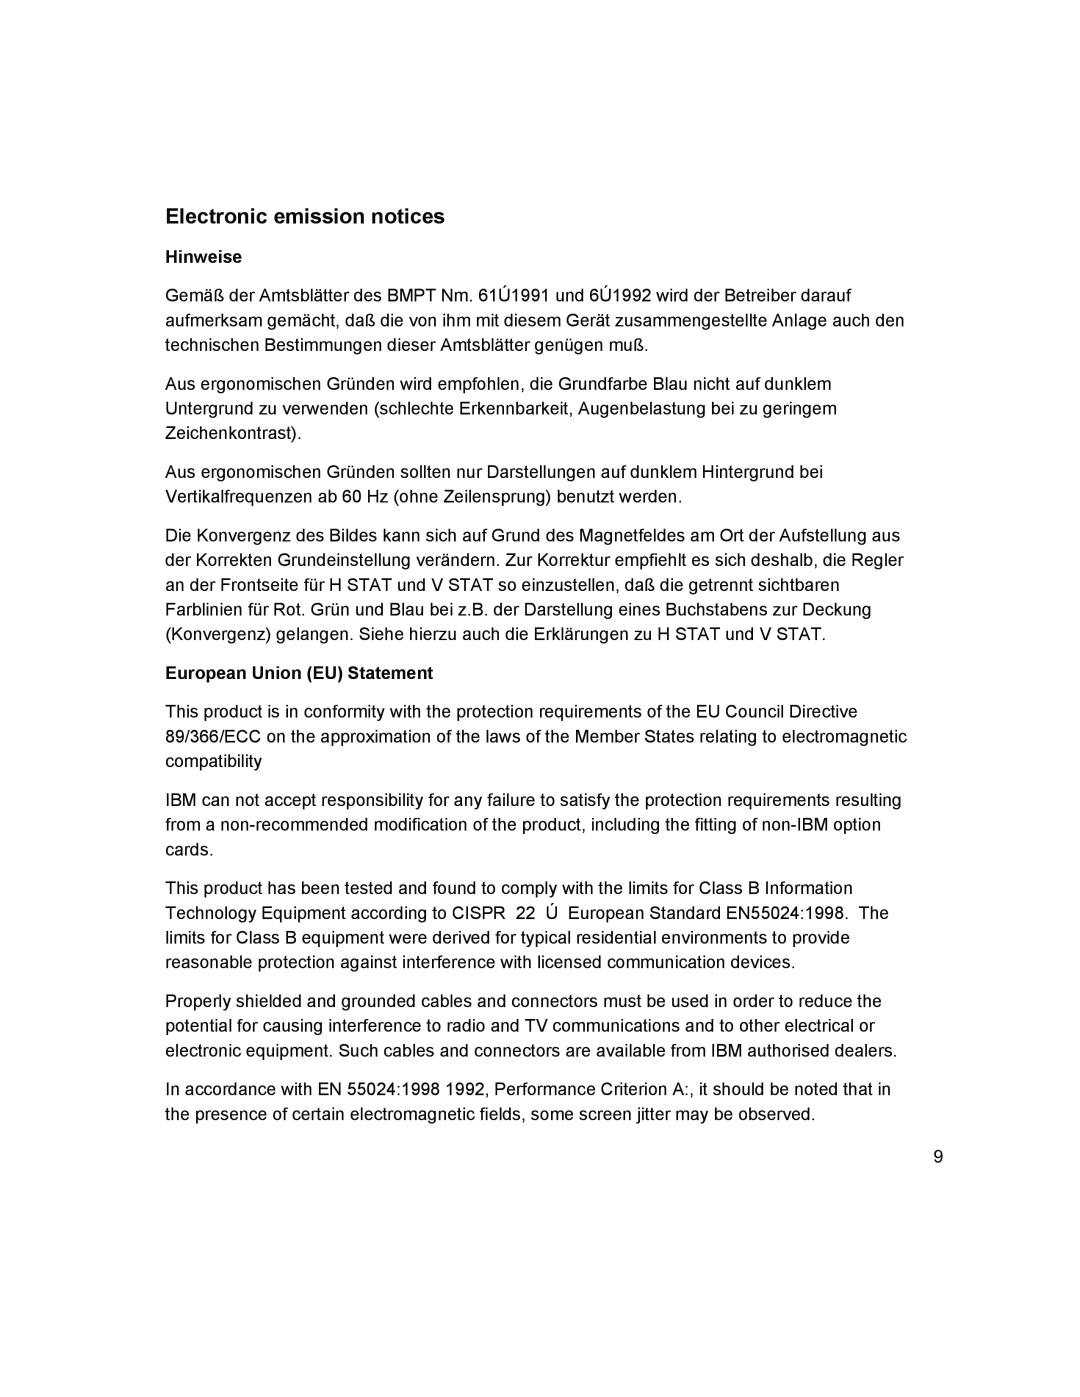 IBM T541A manual Electronic emission notices, Hinweise, European Union EU Statement 